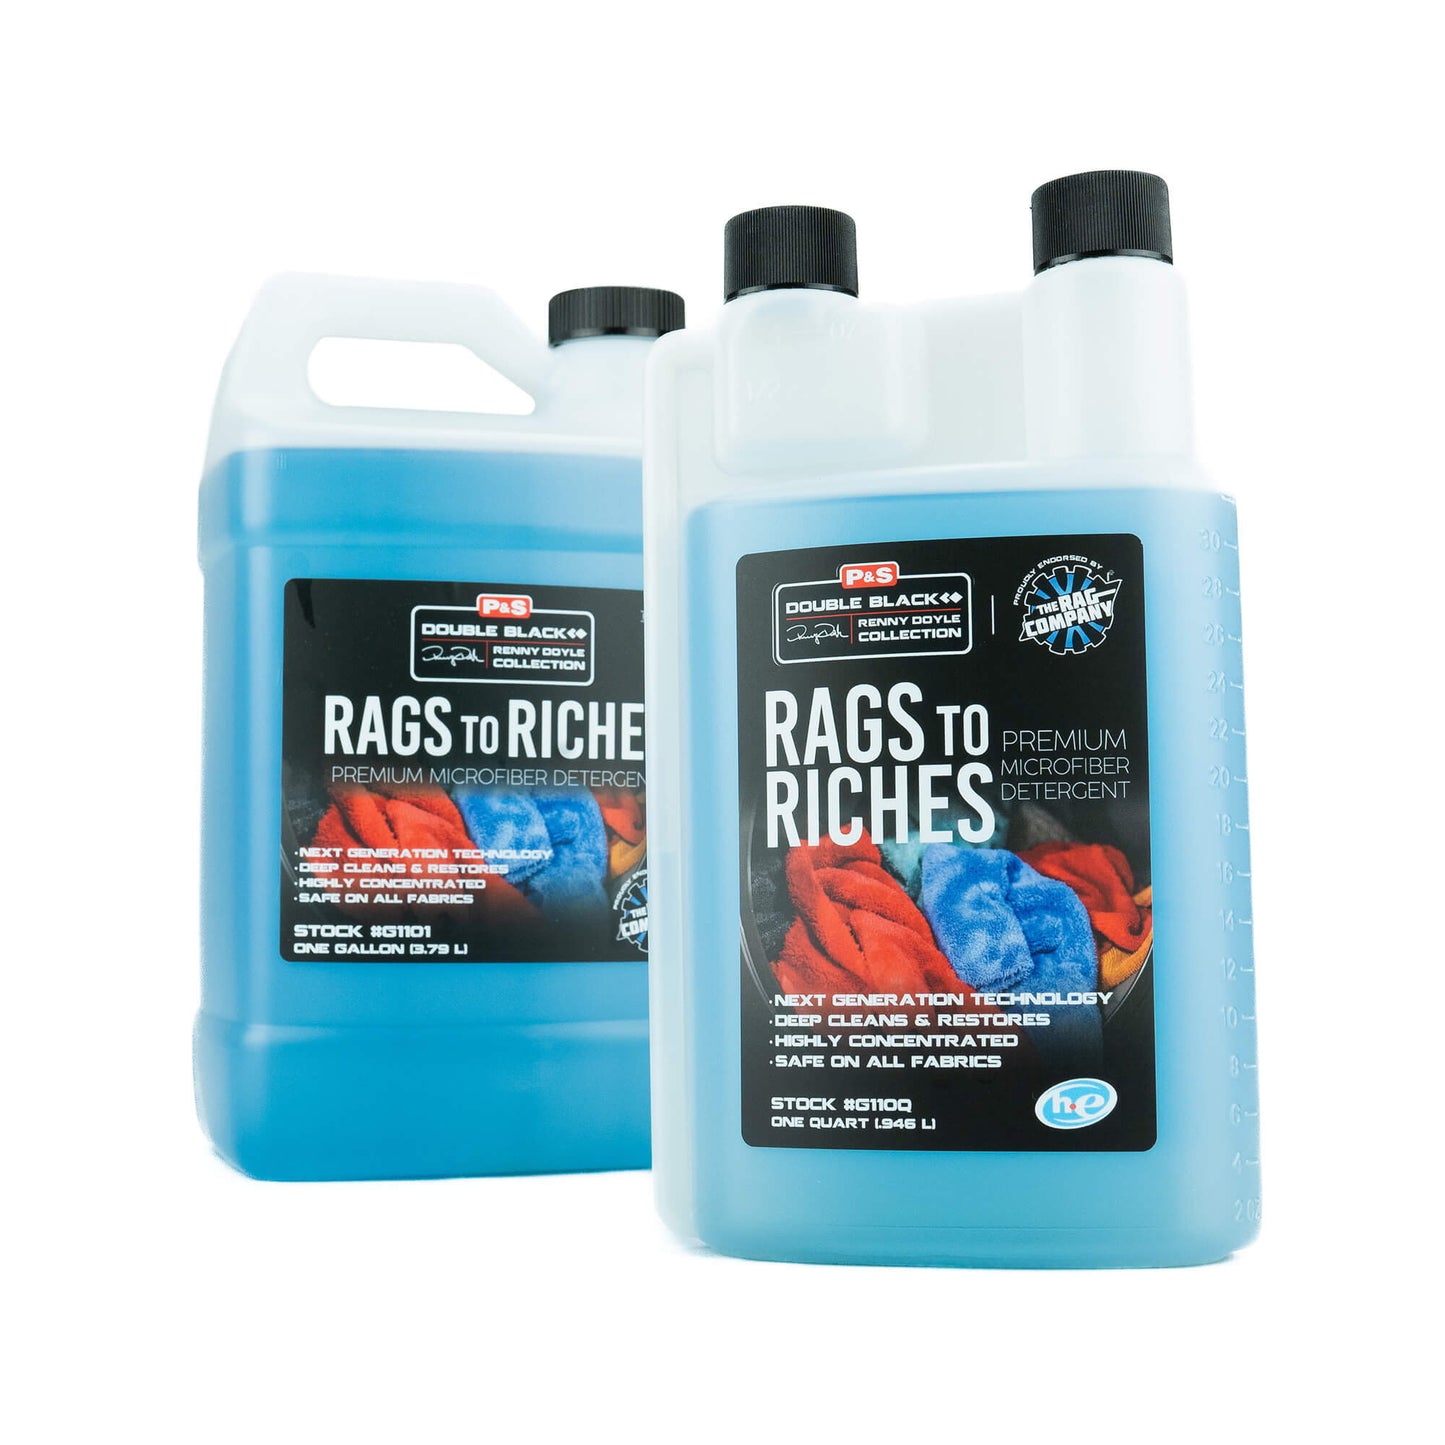 P&S Rags to Riches Microfiber Premium Microfiber Detergent Product